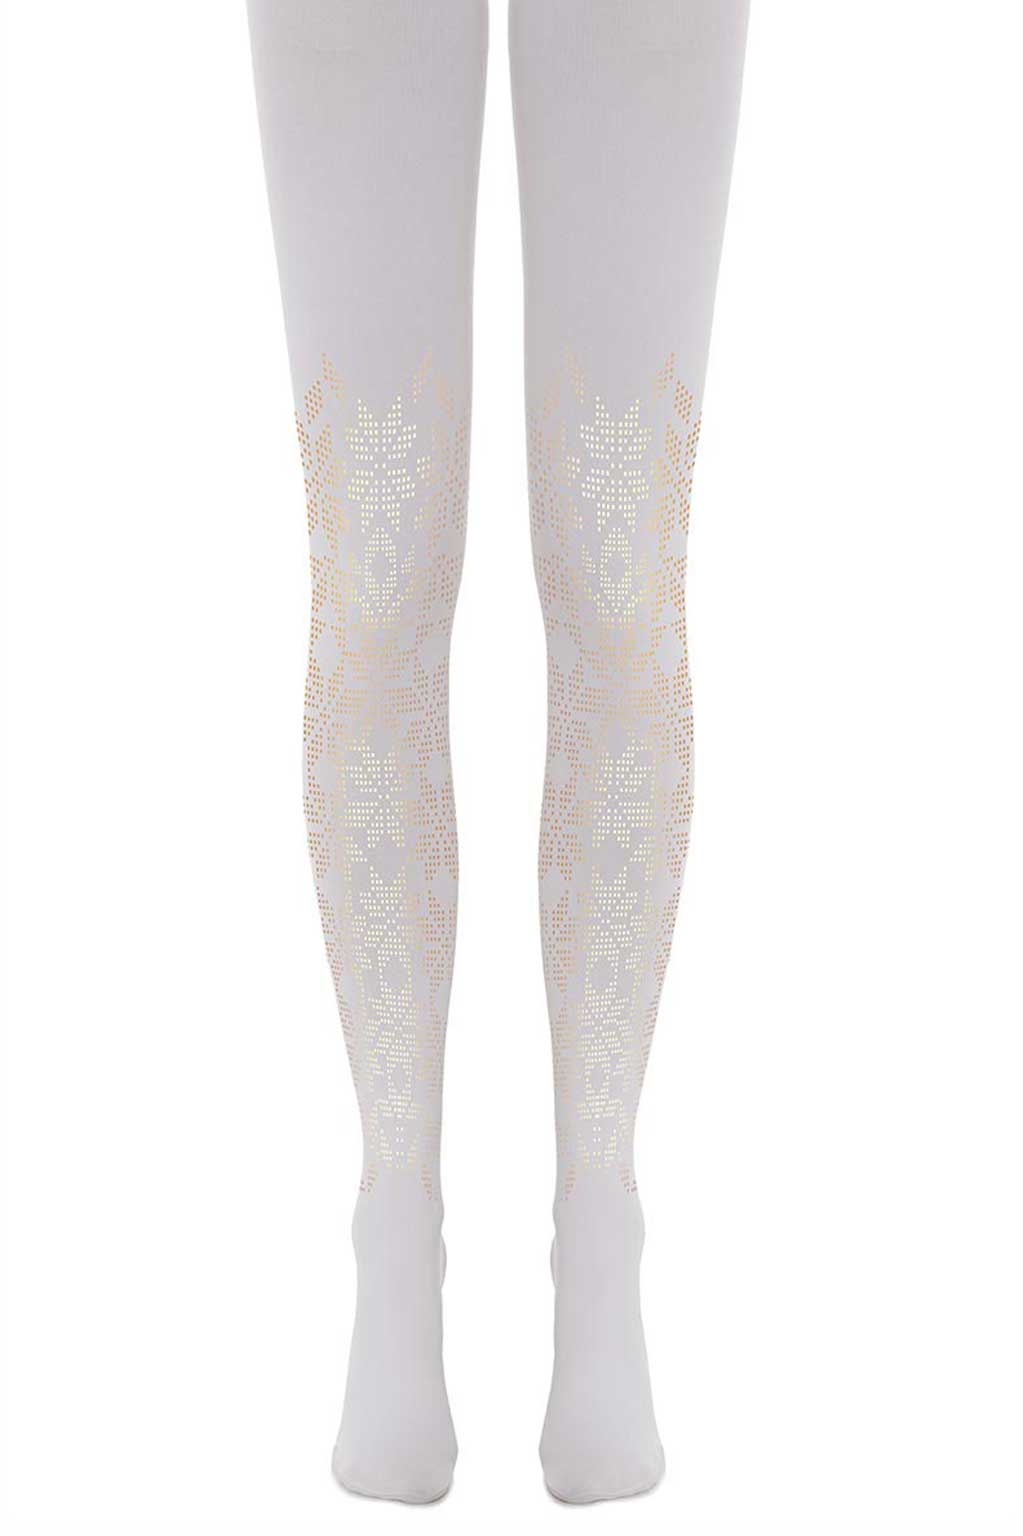 Zohara F541-CG Lace Flower Cream Tights - cream opaque tights with gold snowflake fairisle print